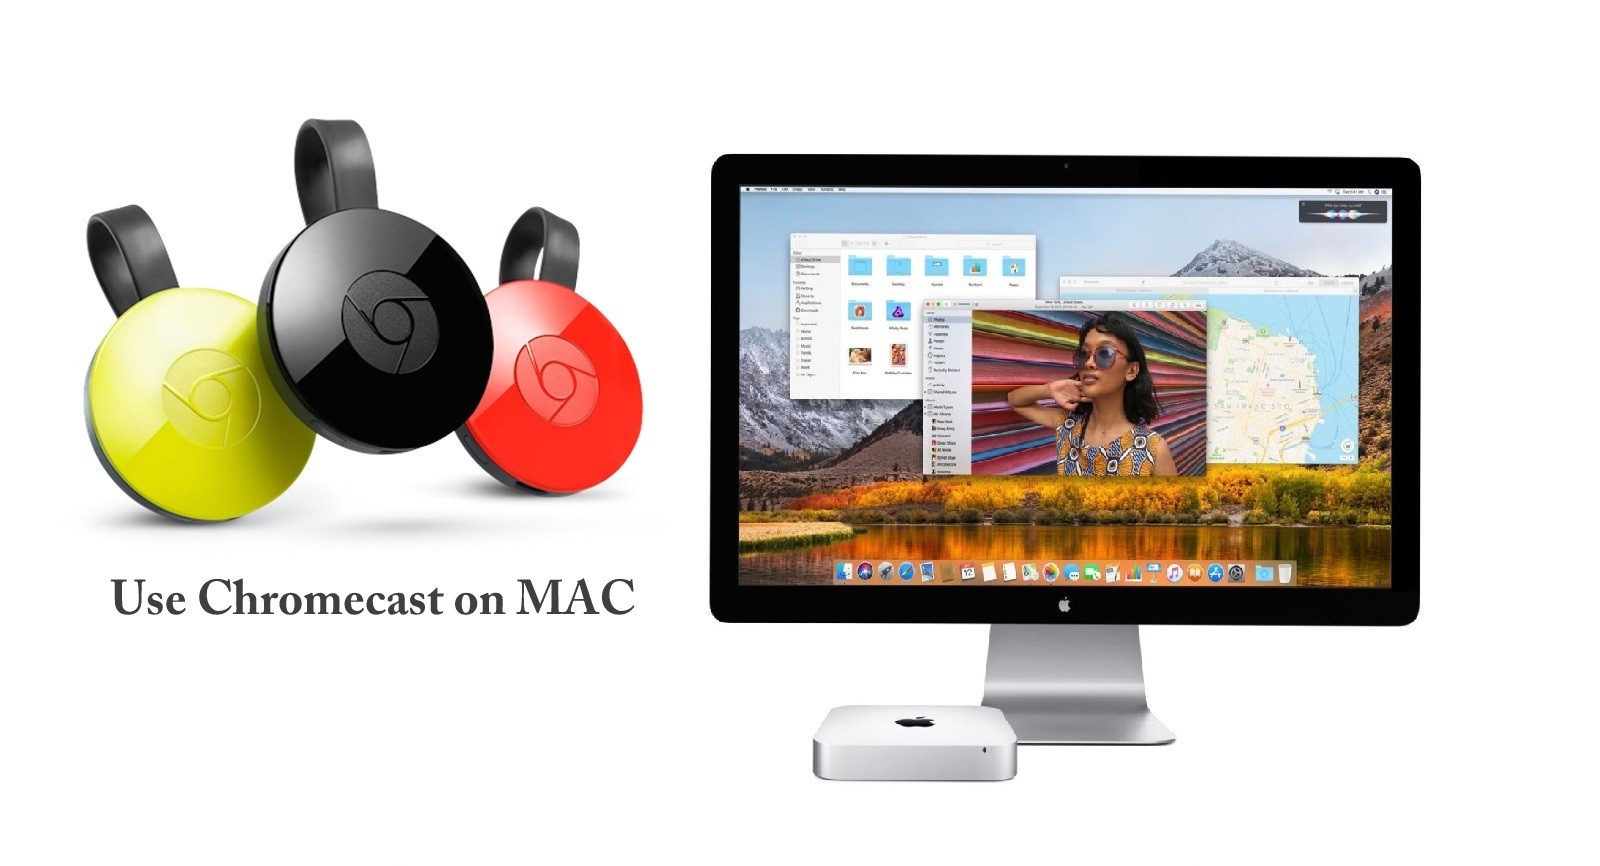 do you need an application for mac for chromecast